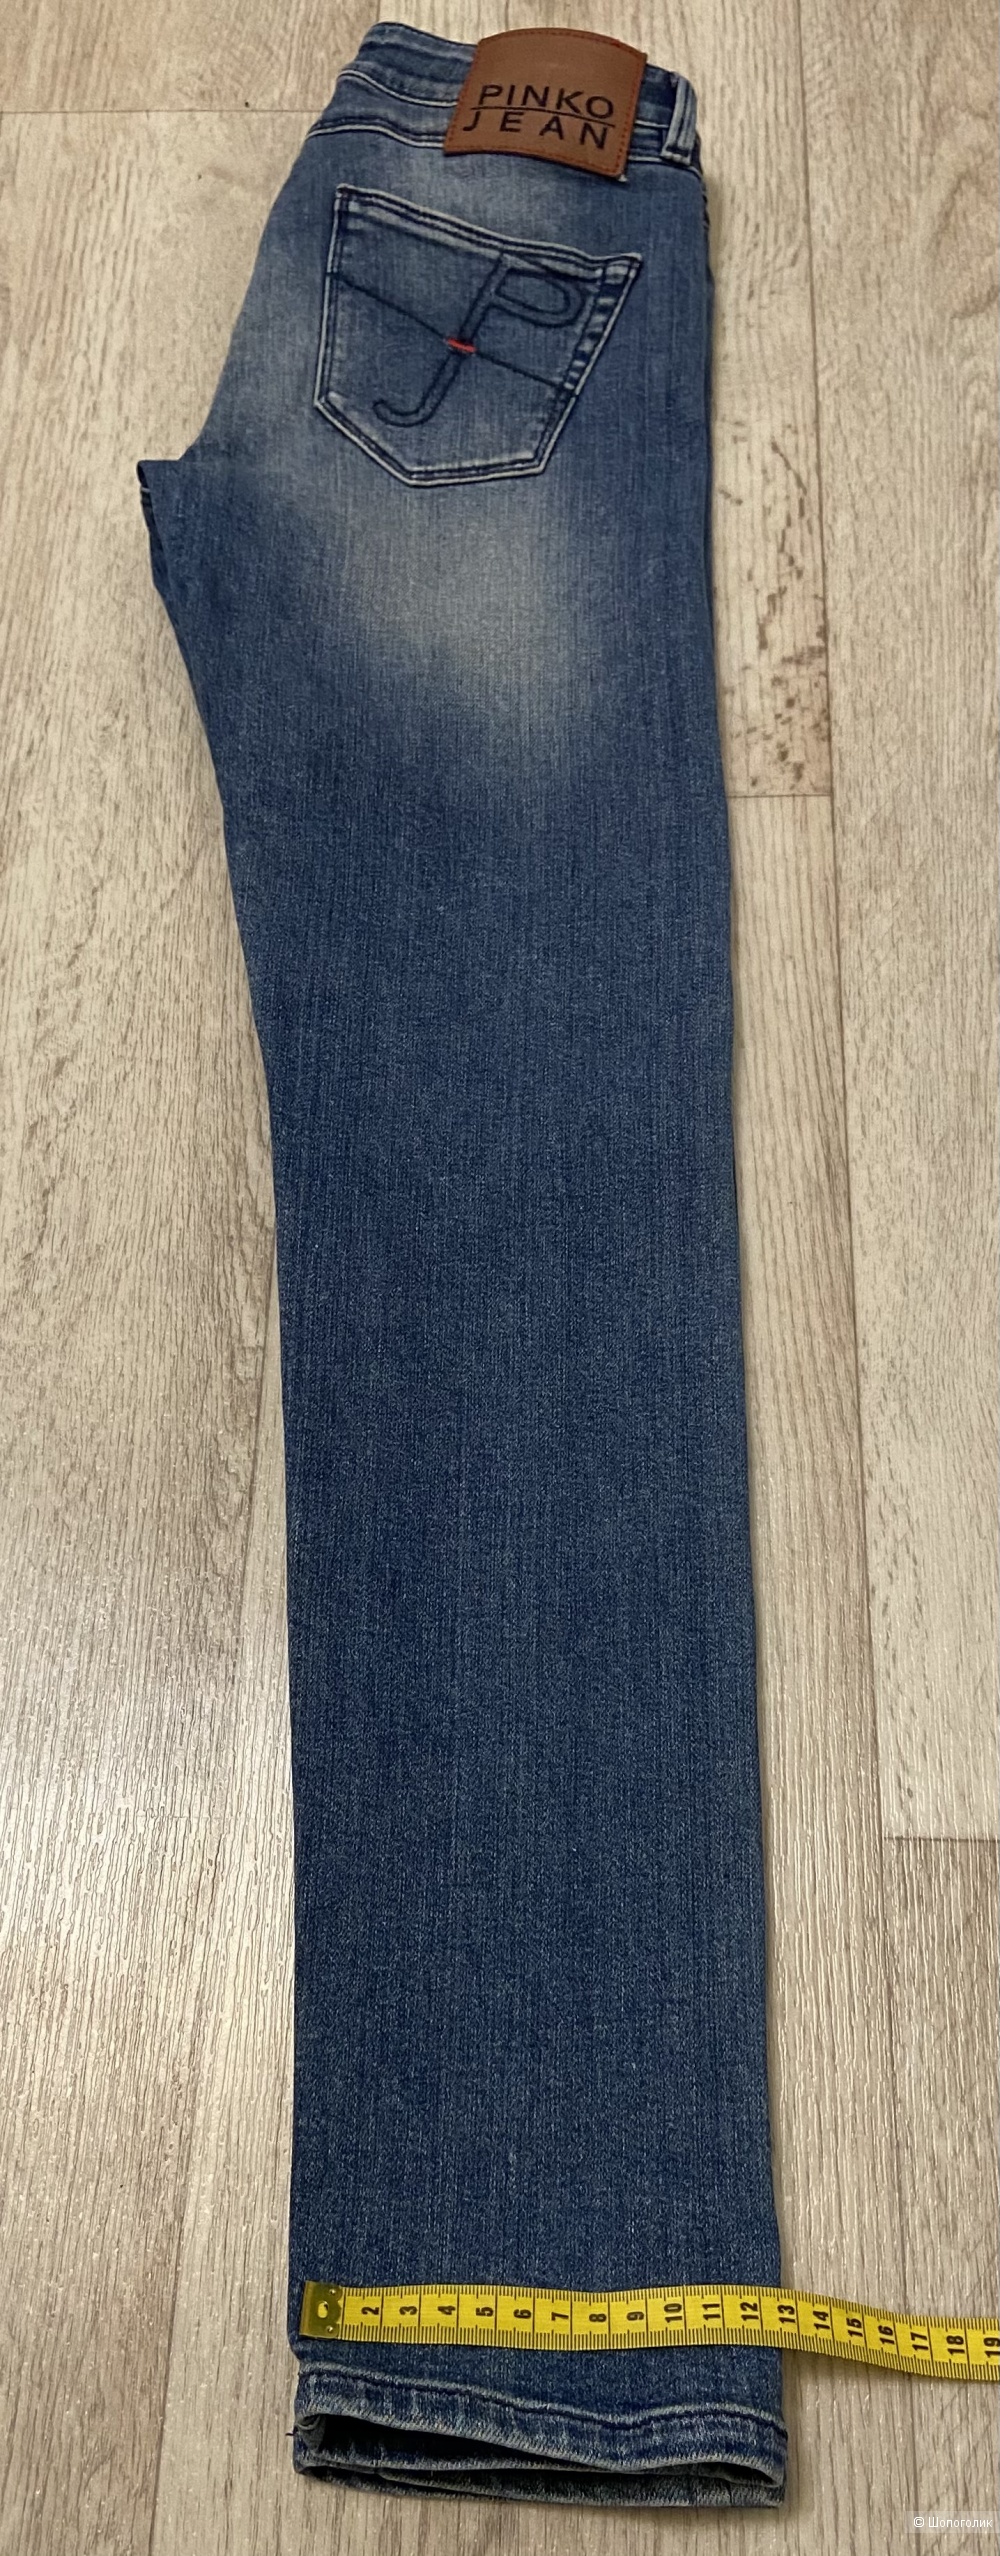 PINKO джинсы размер 27 (XS-S)